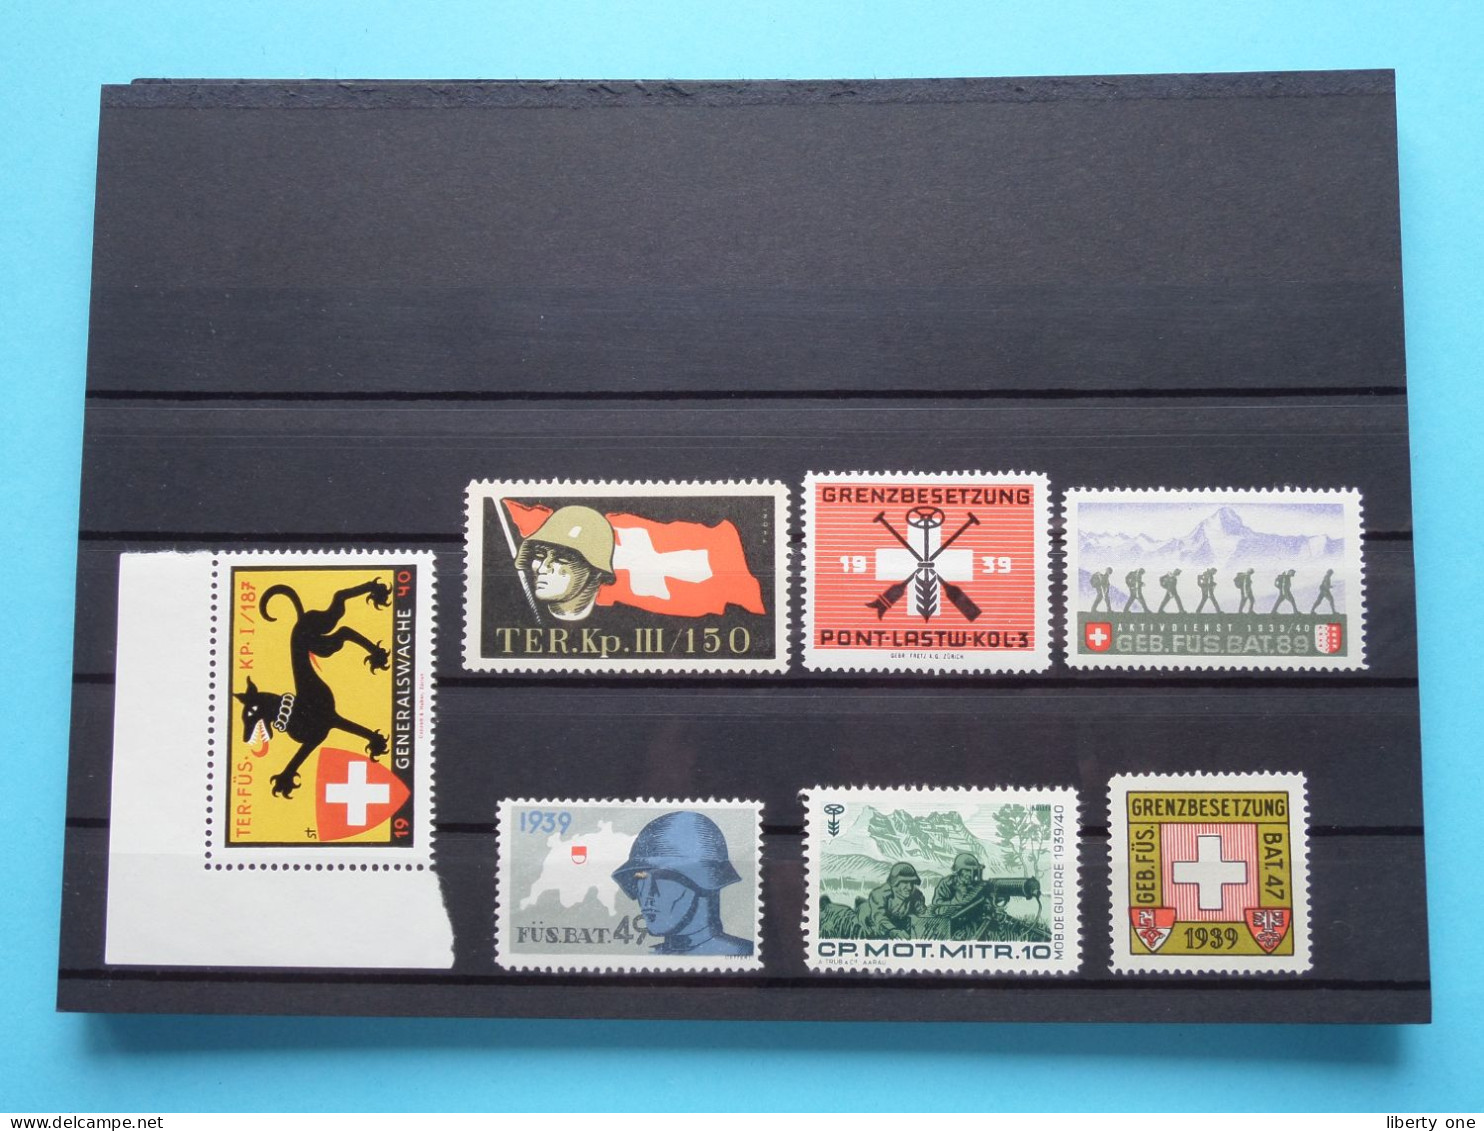 Lotje >> Sluitzegel Timbres-Vignettes Picture Stamp Verschlussmarken ( What You See Is What You Get ) La SUISSE ! - Algemene Zegels